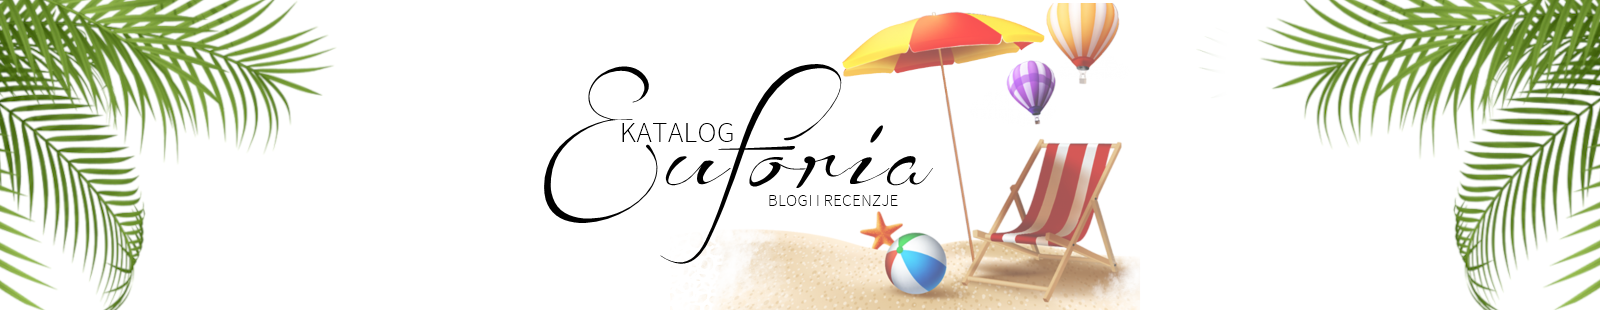 Katalog Euforia – blogi, recenzje